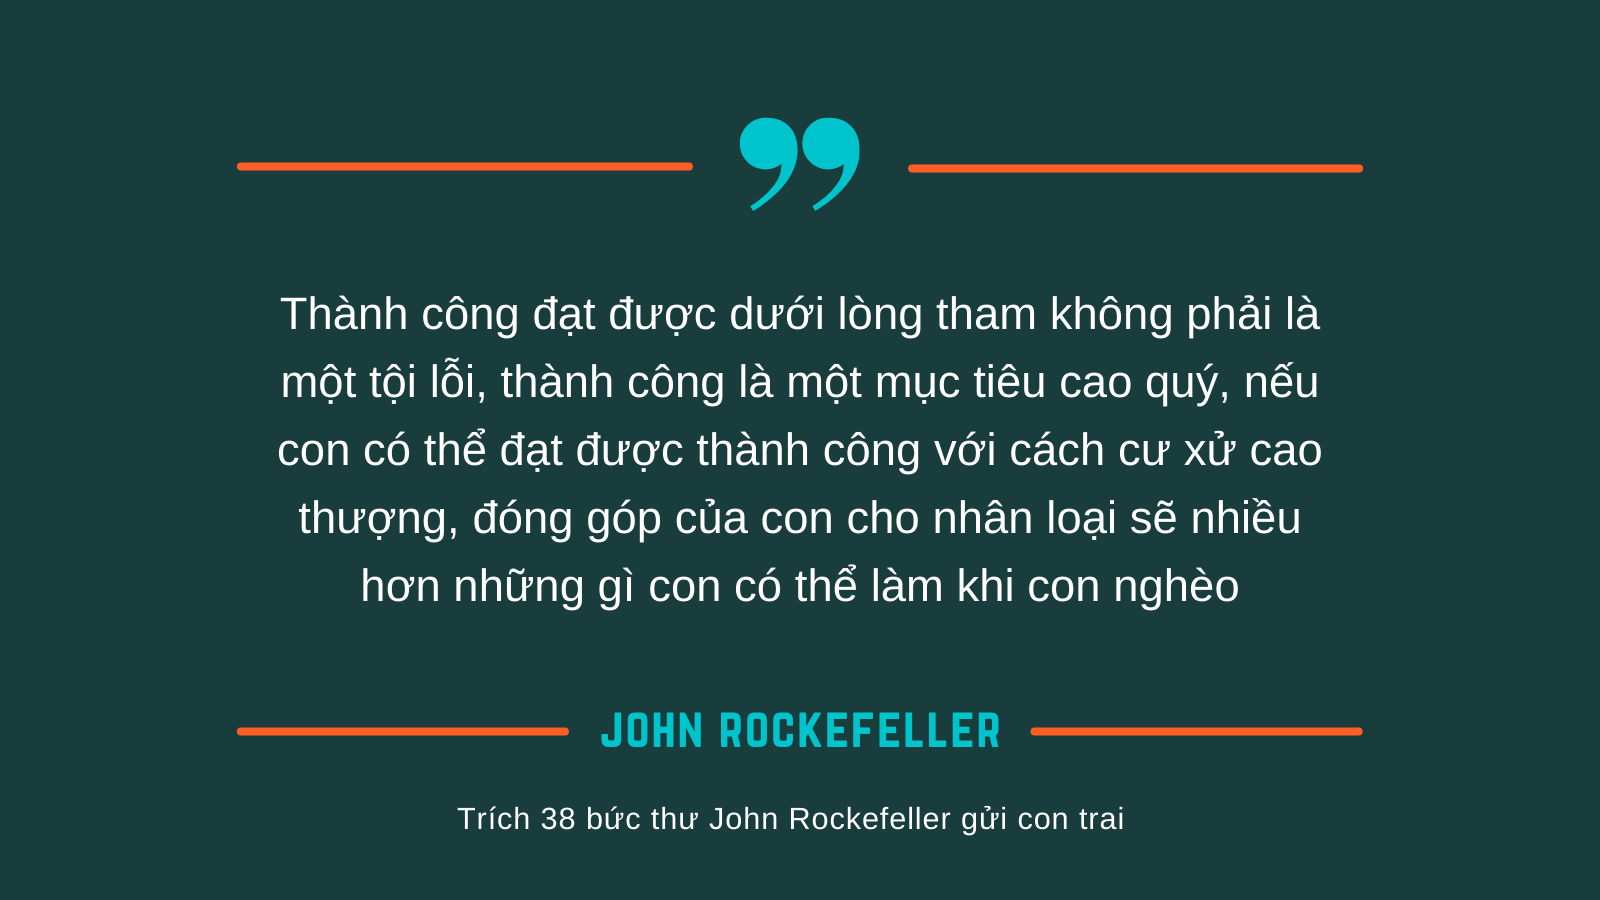 38 buc thu gui con trai cua John Rockefeller 21